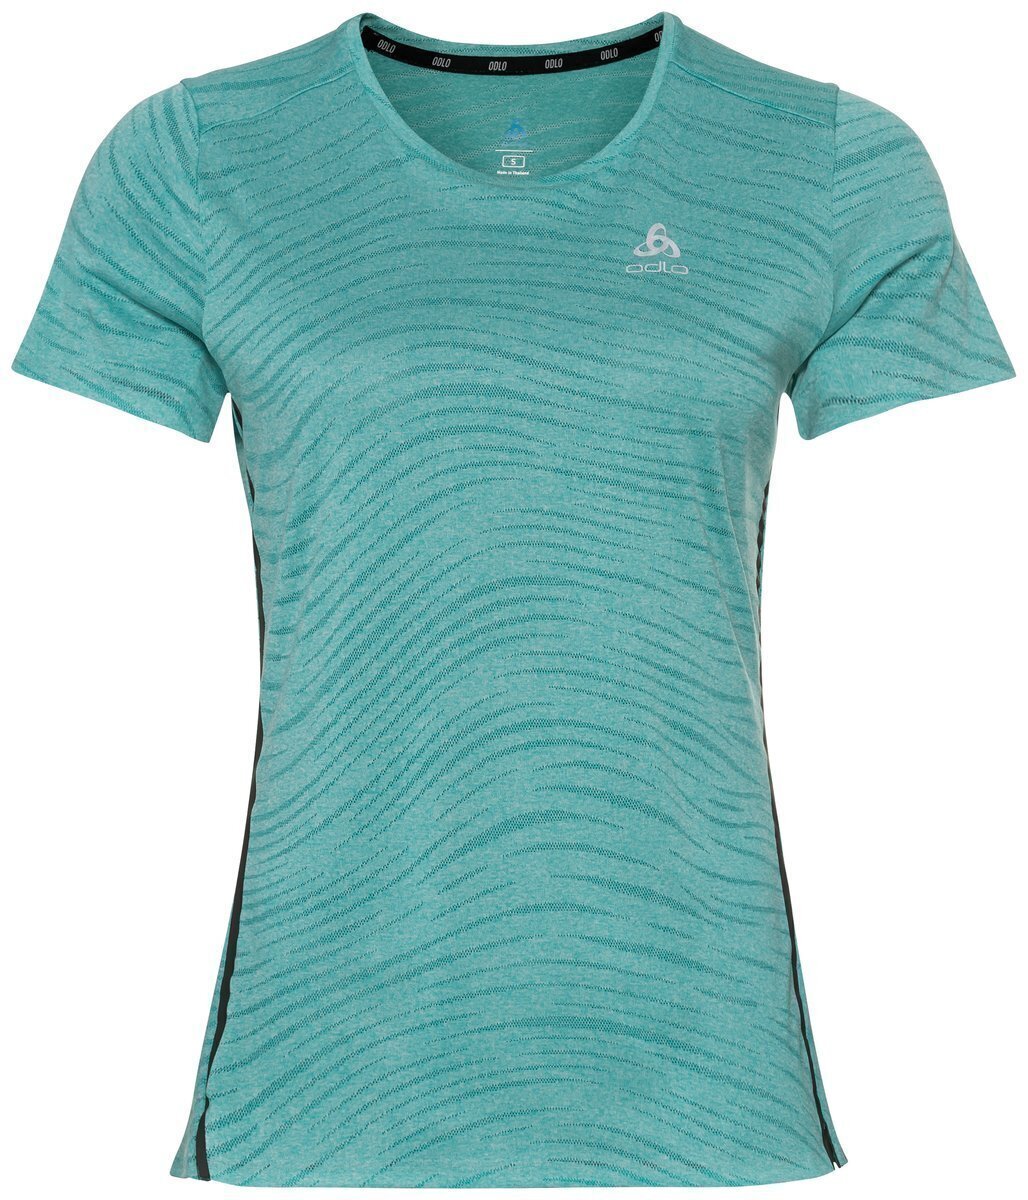 Běžecké tričko s krátkým rukávem
 Odlo Zeroweight Engineered Chill-Tec T-Shirt Jaded Melange S Běžecké tričko s krátkým rukávem